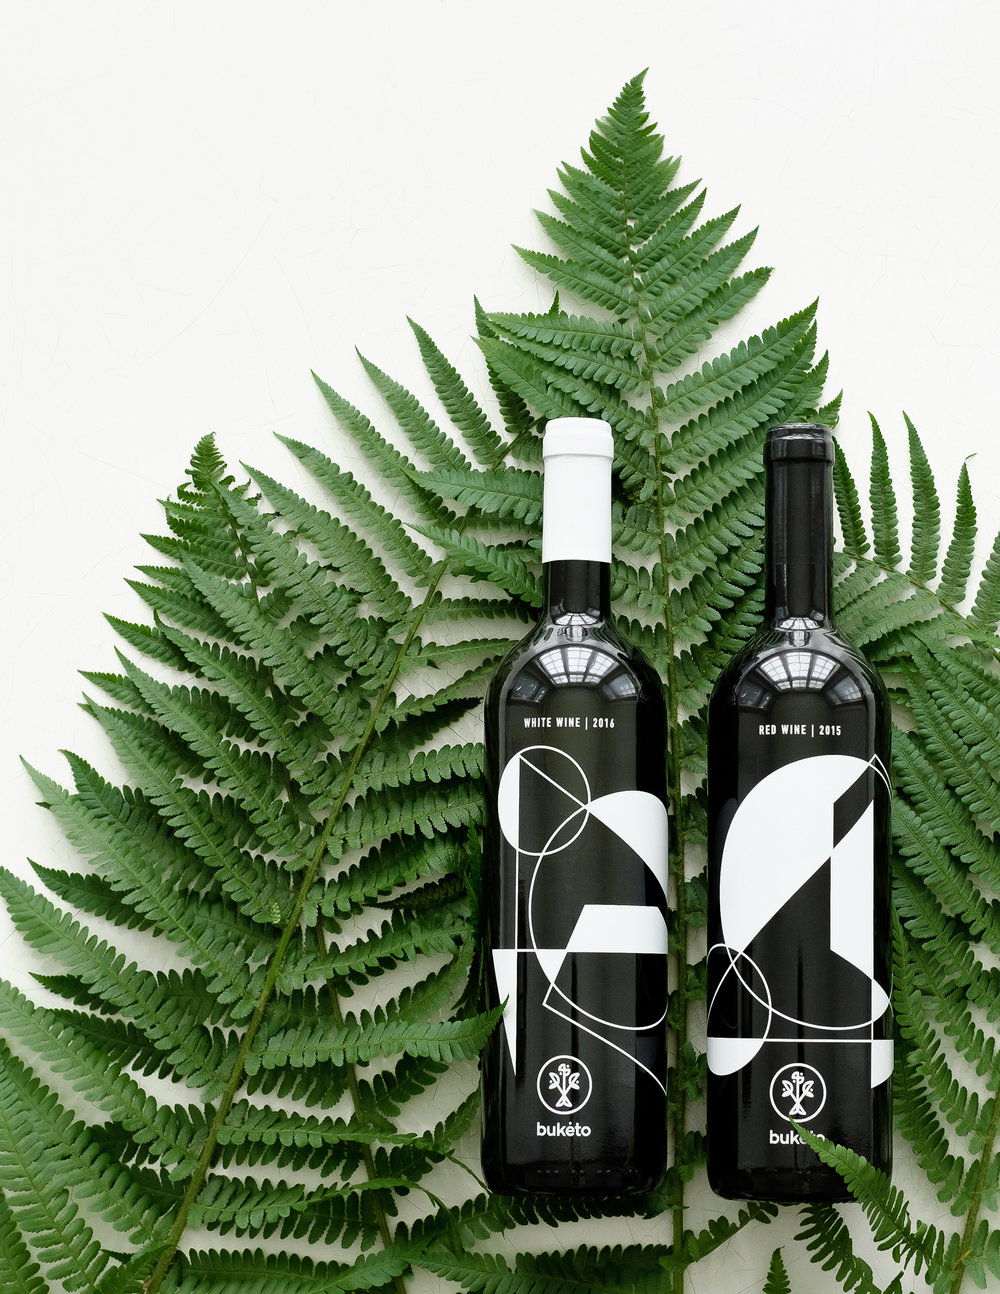 Buketo wine bottle designs by Lazy snail Design